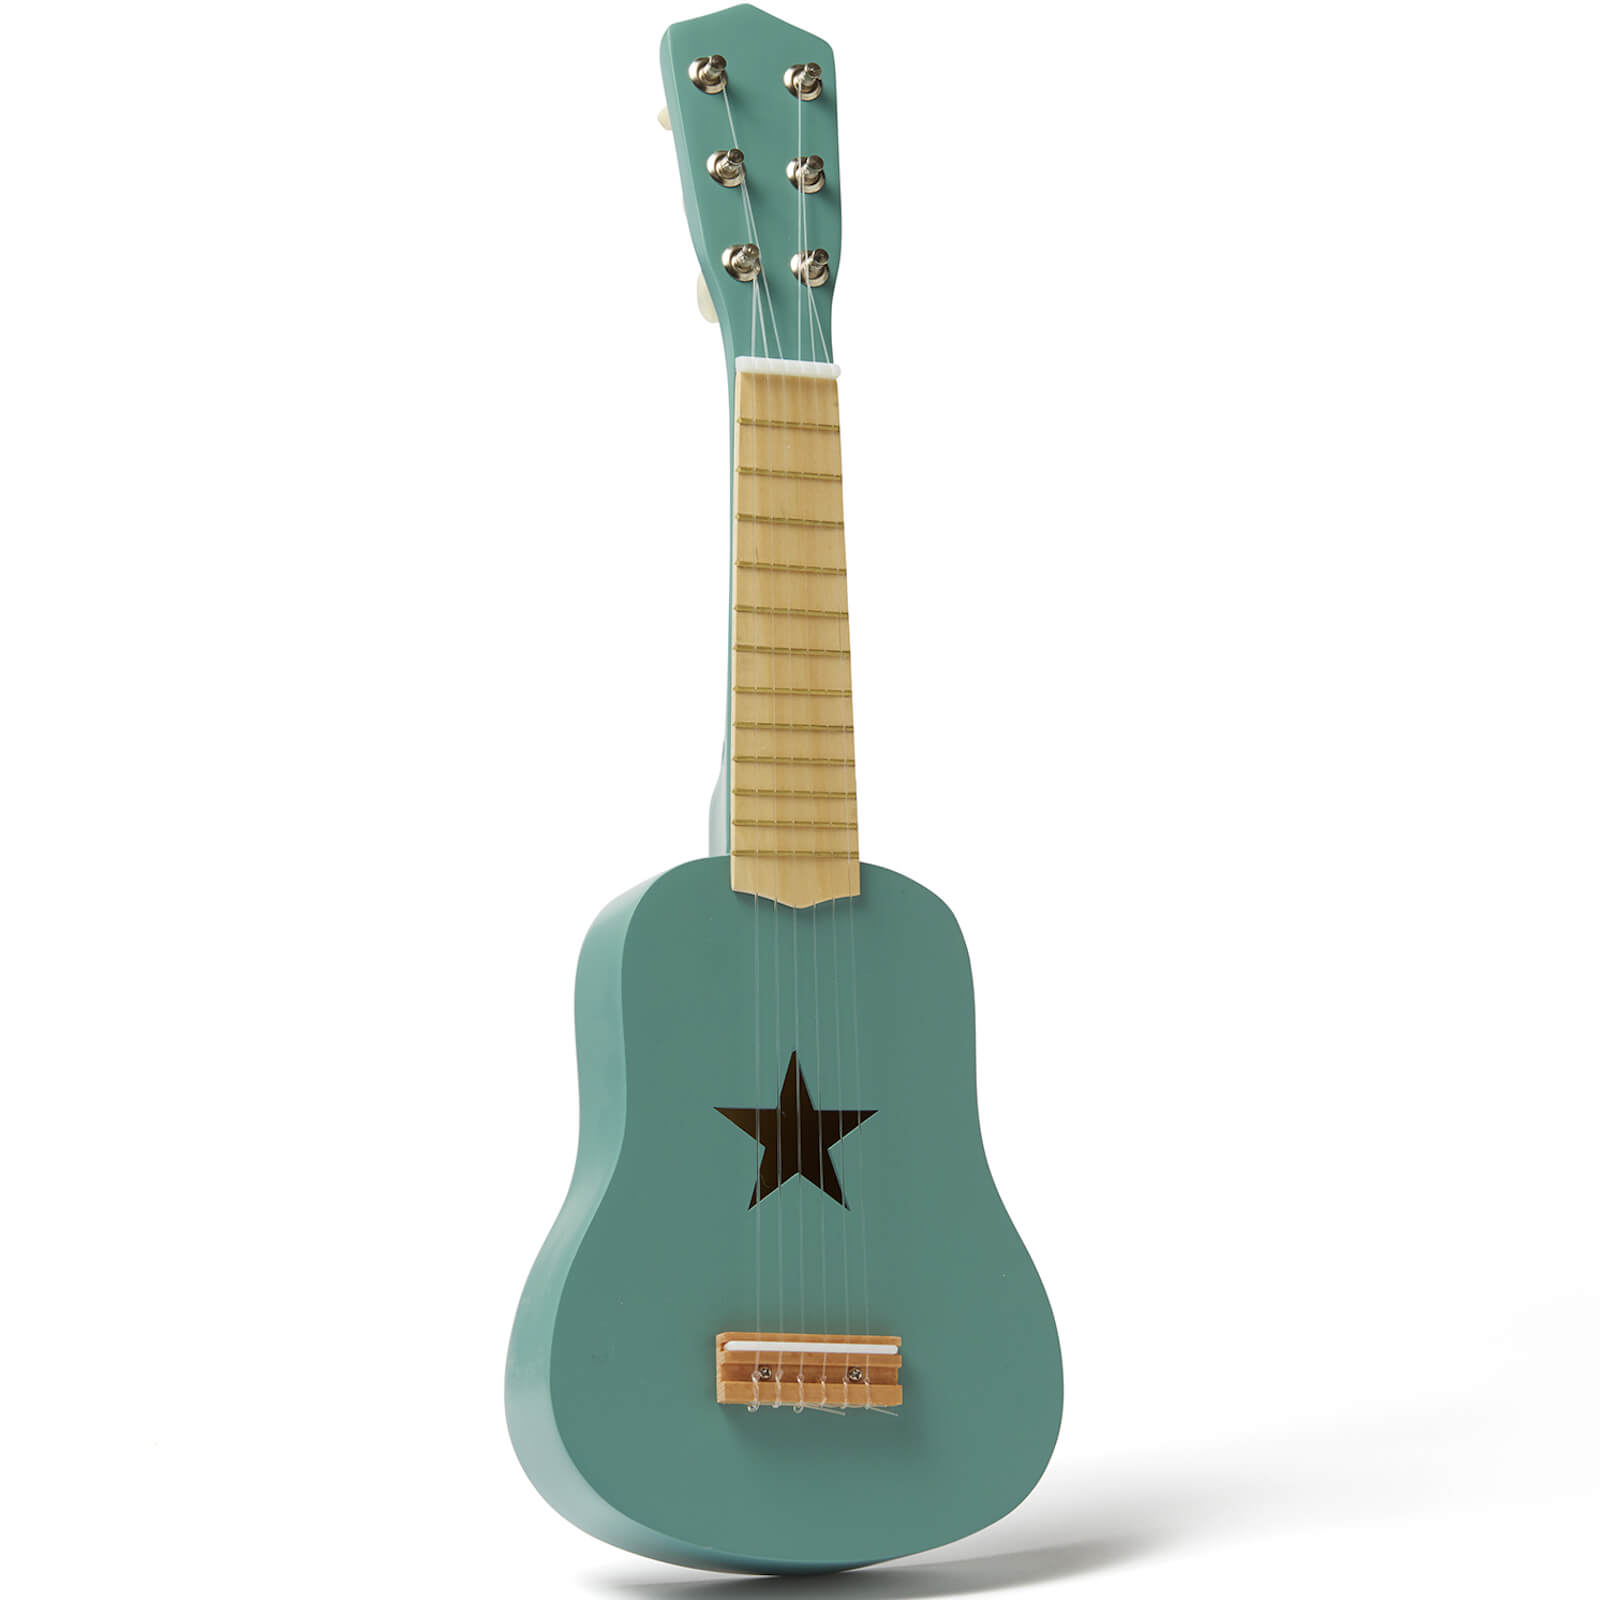 Kids Concept Kids Concept Wooden Toy Guitar - Green